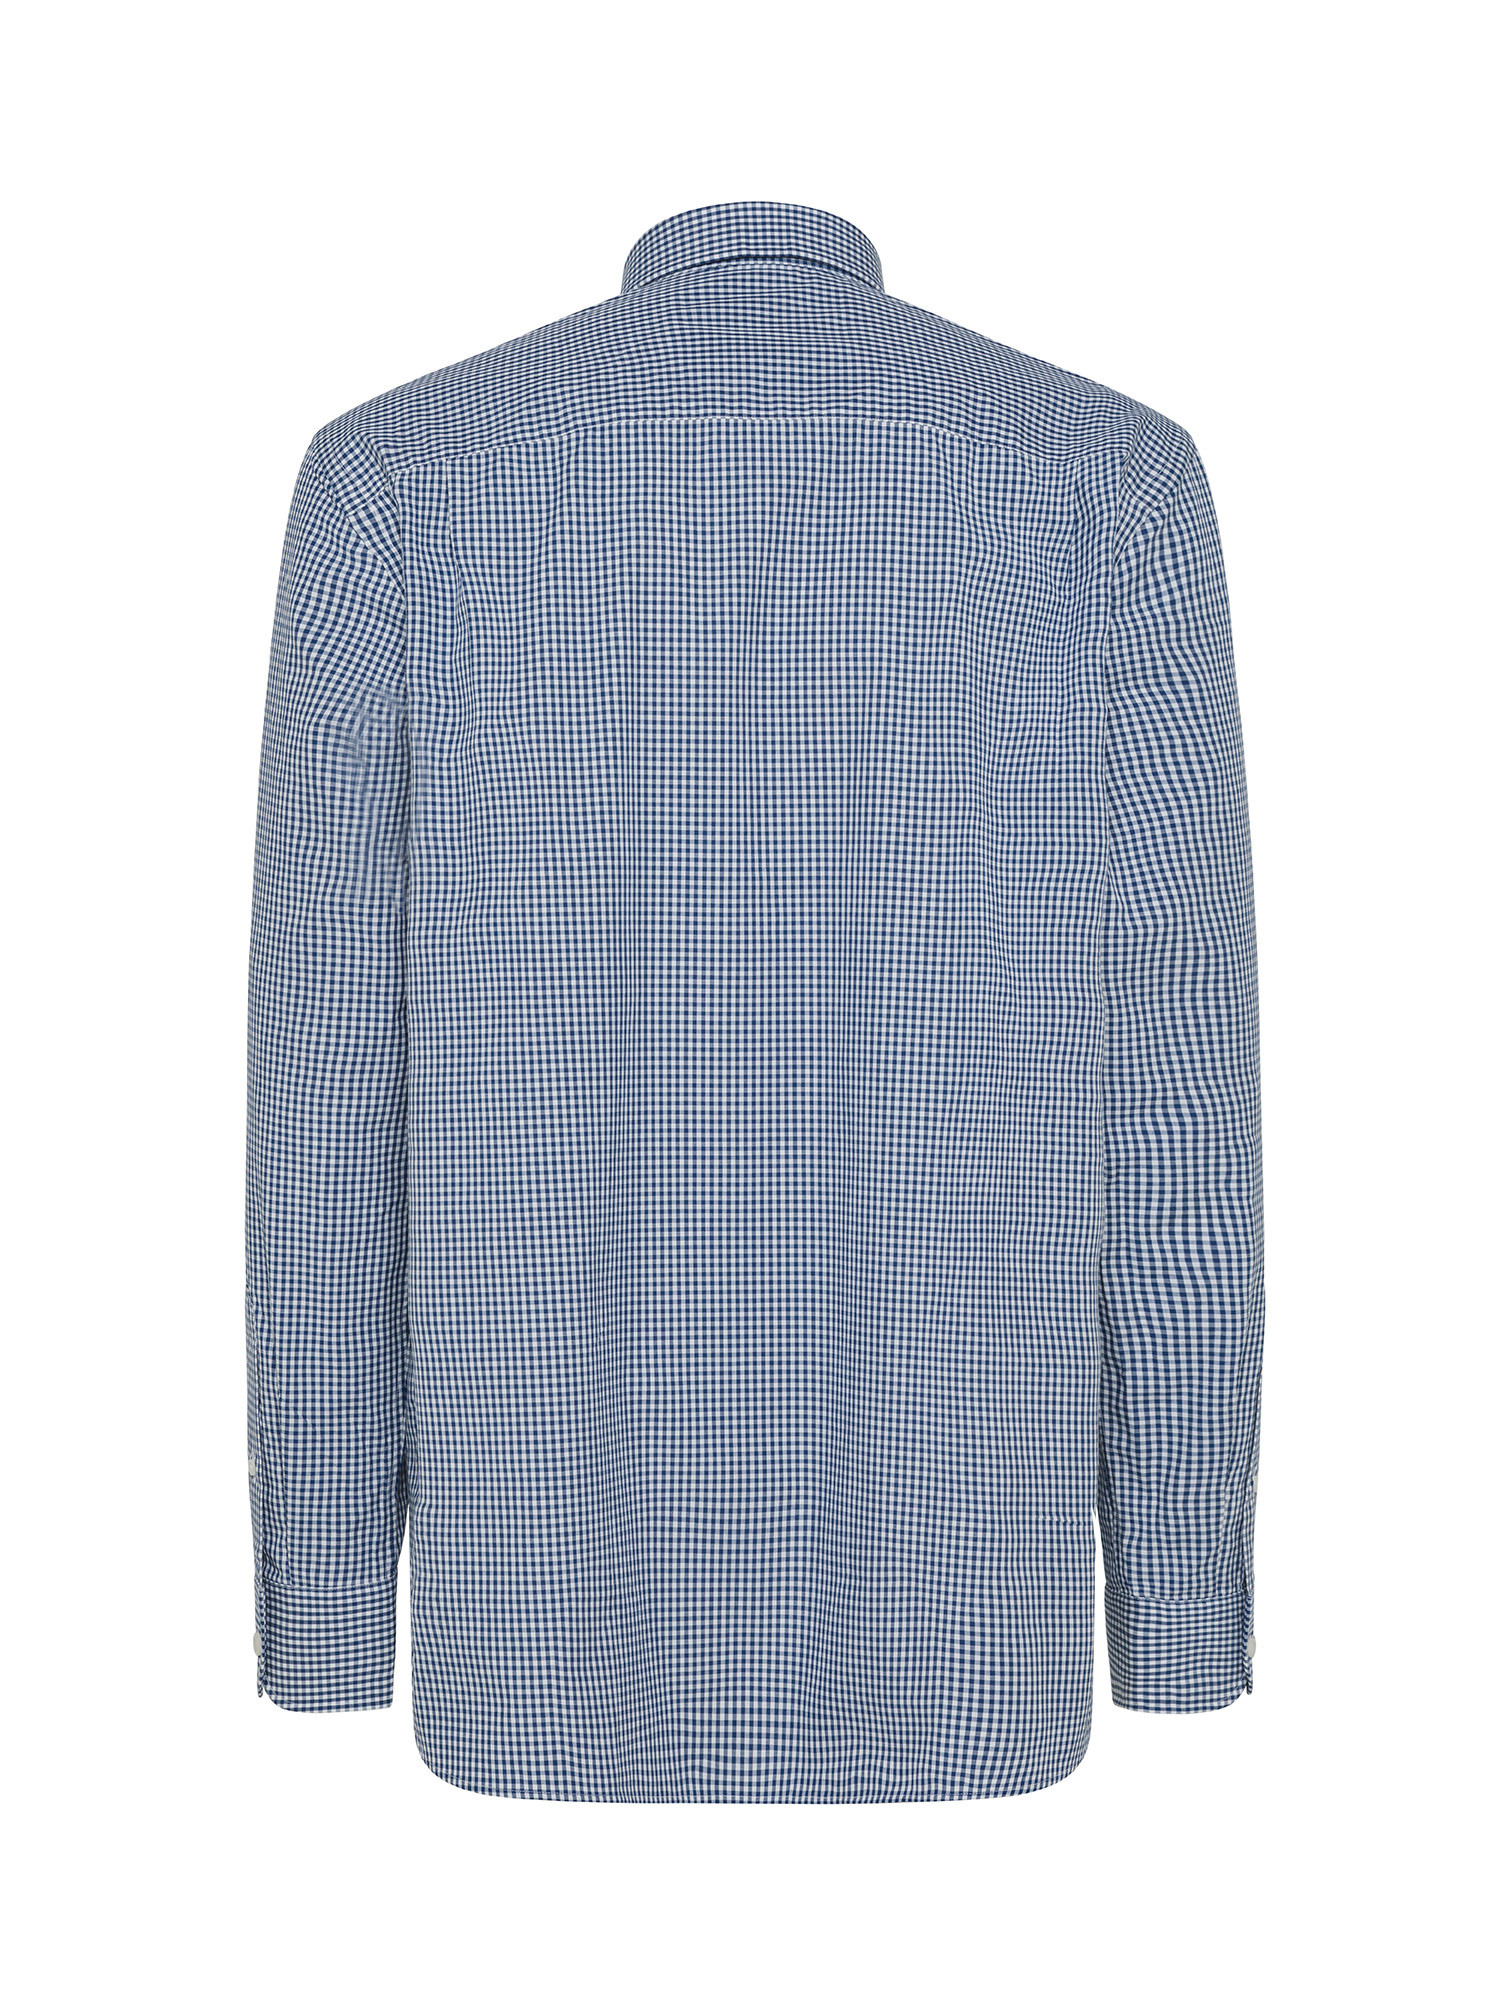 Luca D'Altieri - Regular fit shirt in pure cotton, Blue, large image number 1